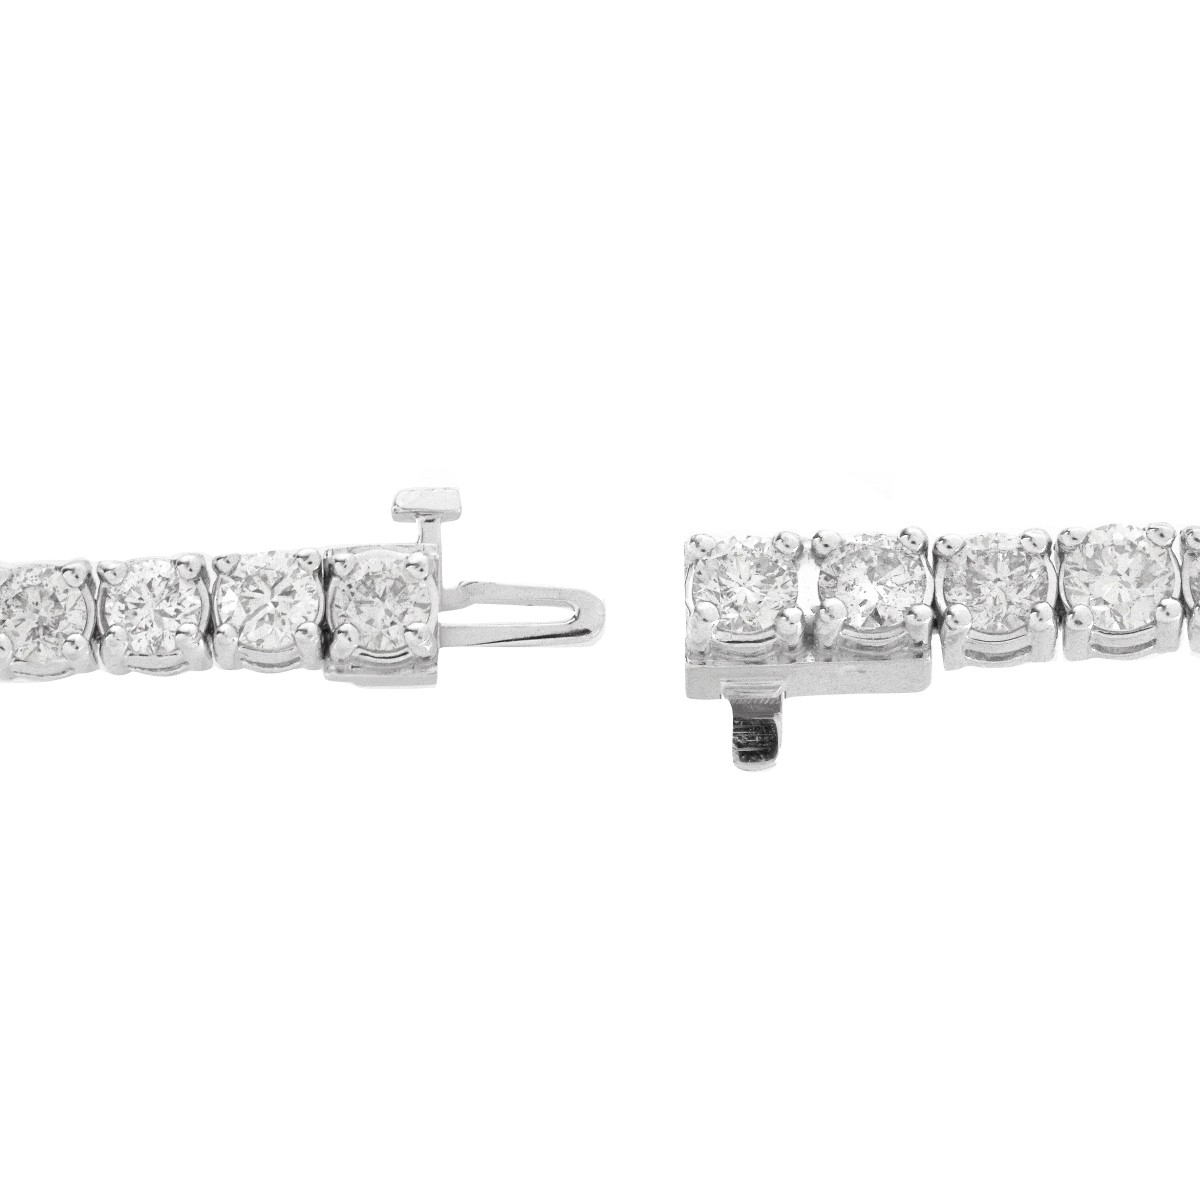 Diamond and 14K Line Bracelet